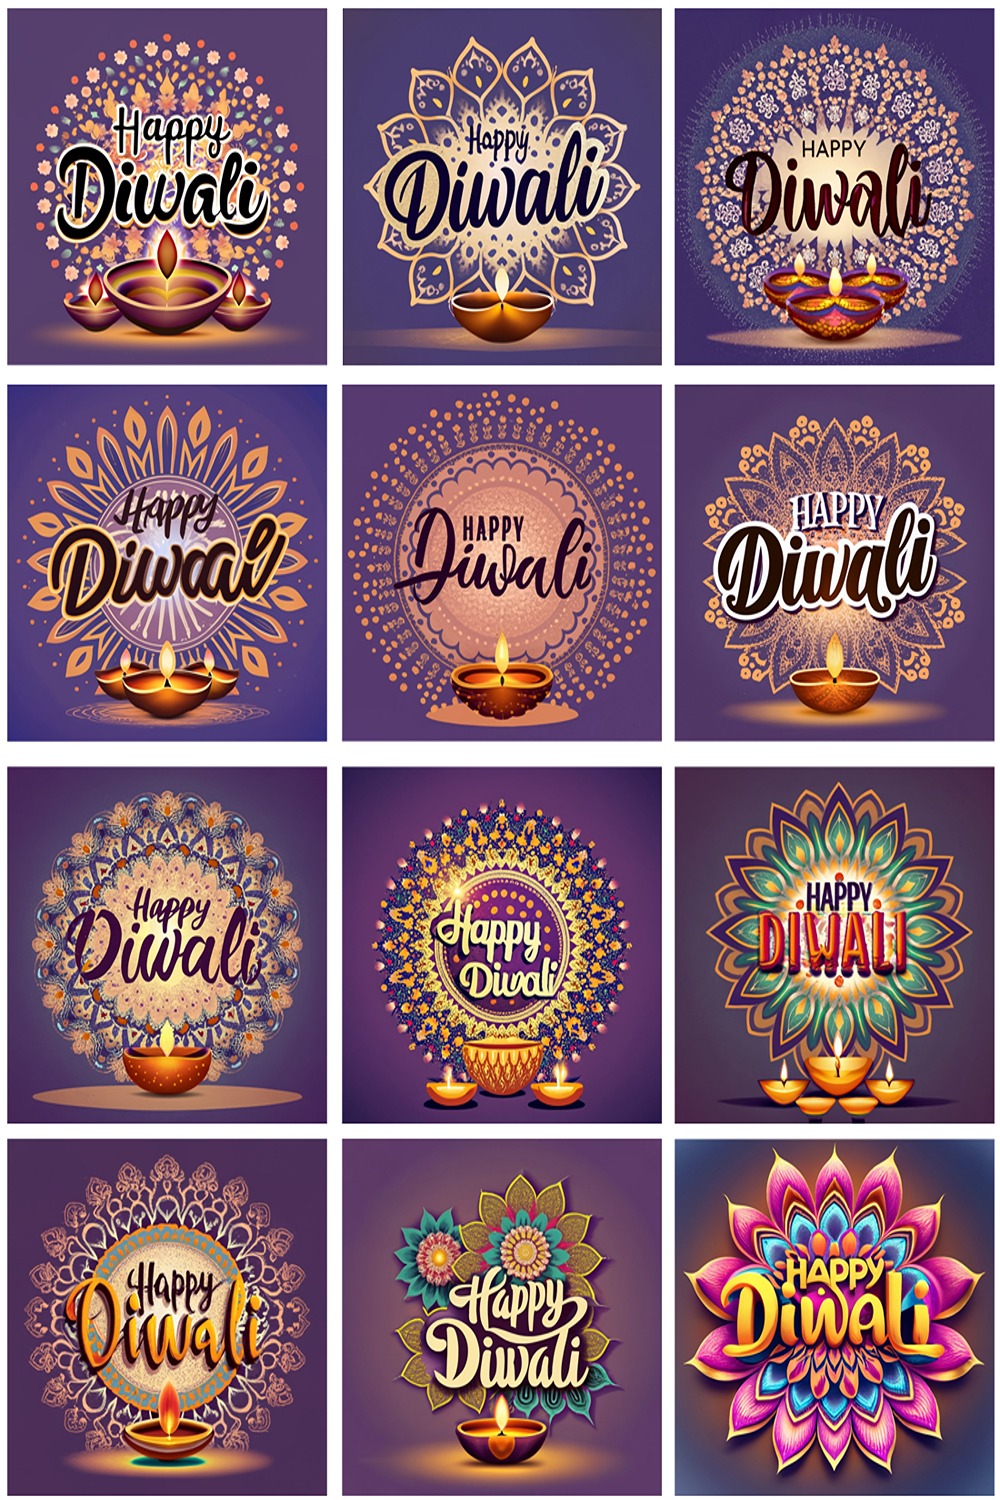 Happy Diwali....